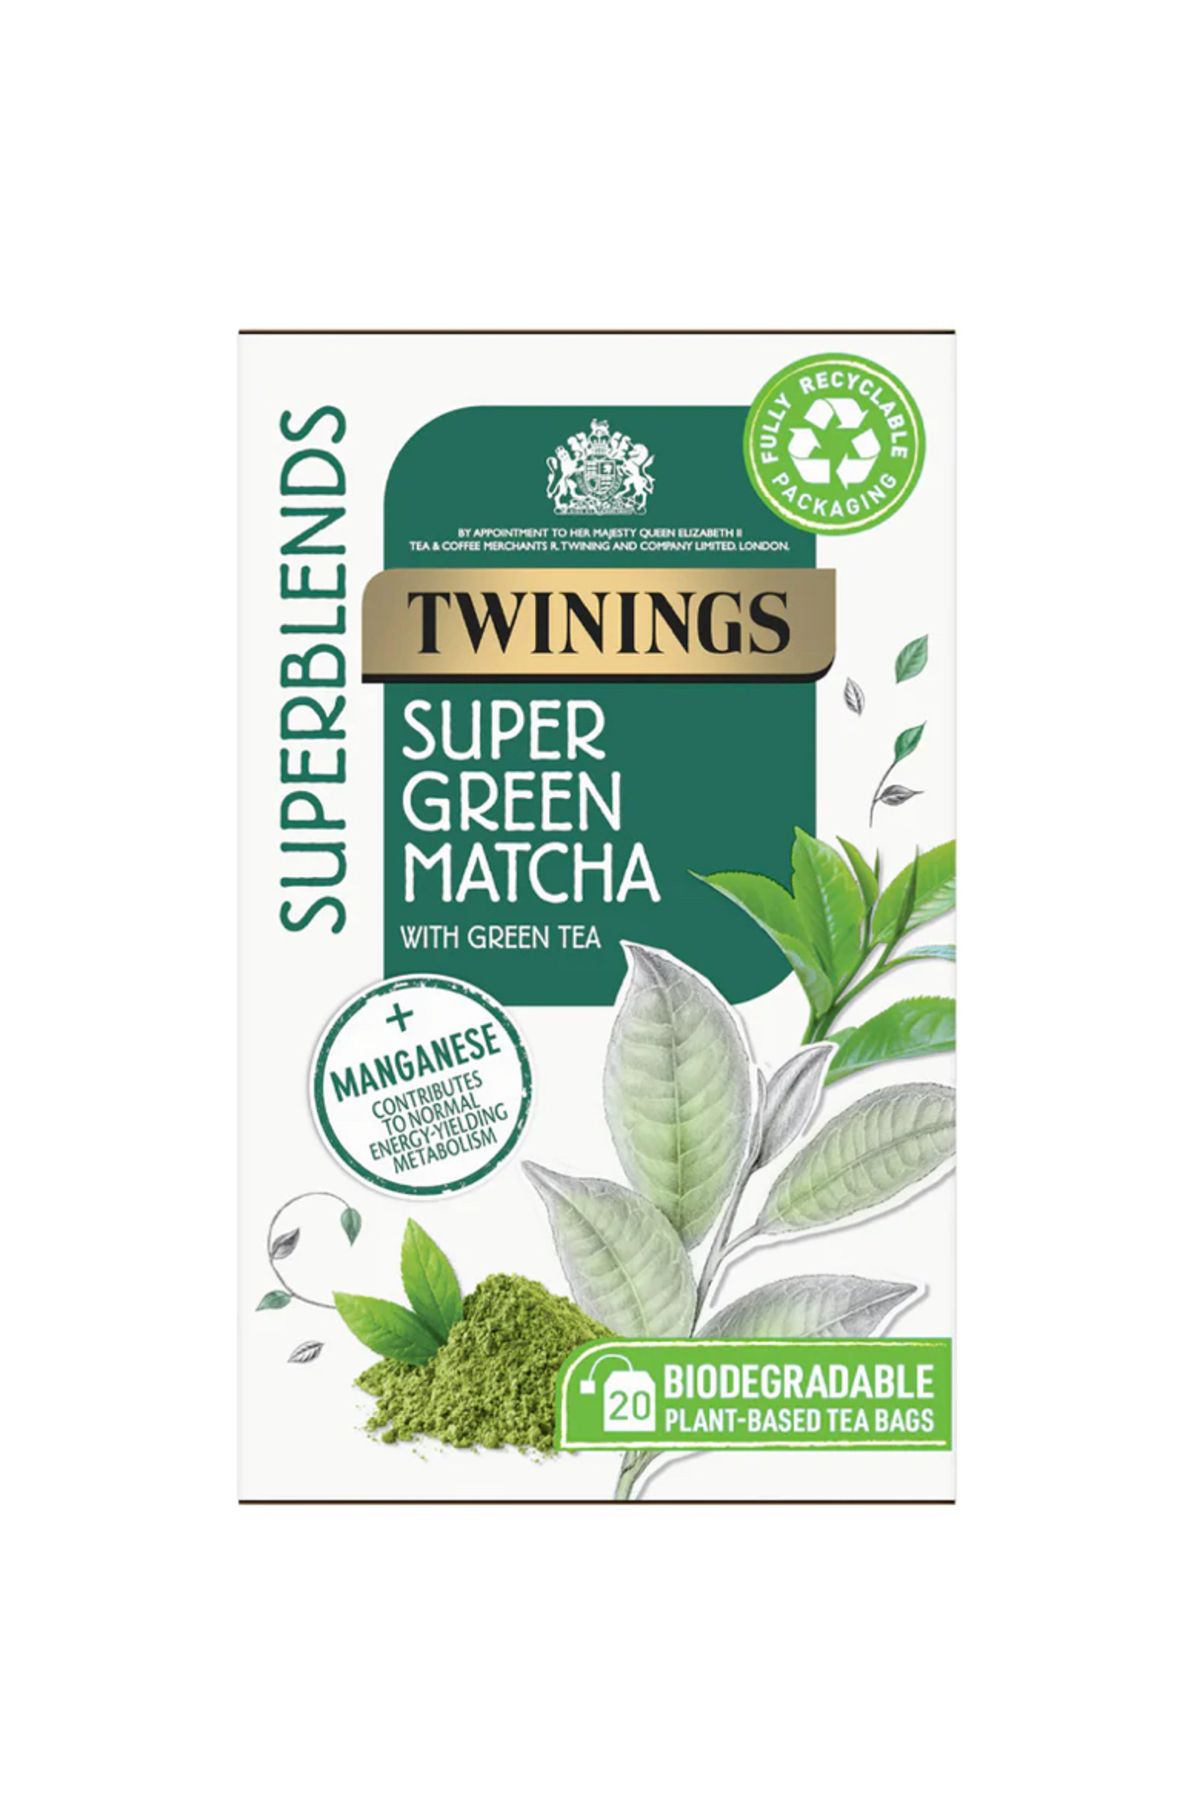 Twinings Superblends Super Green Matcha